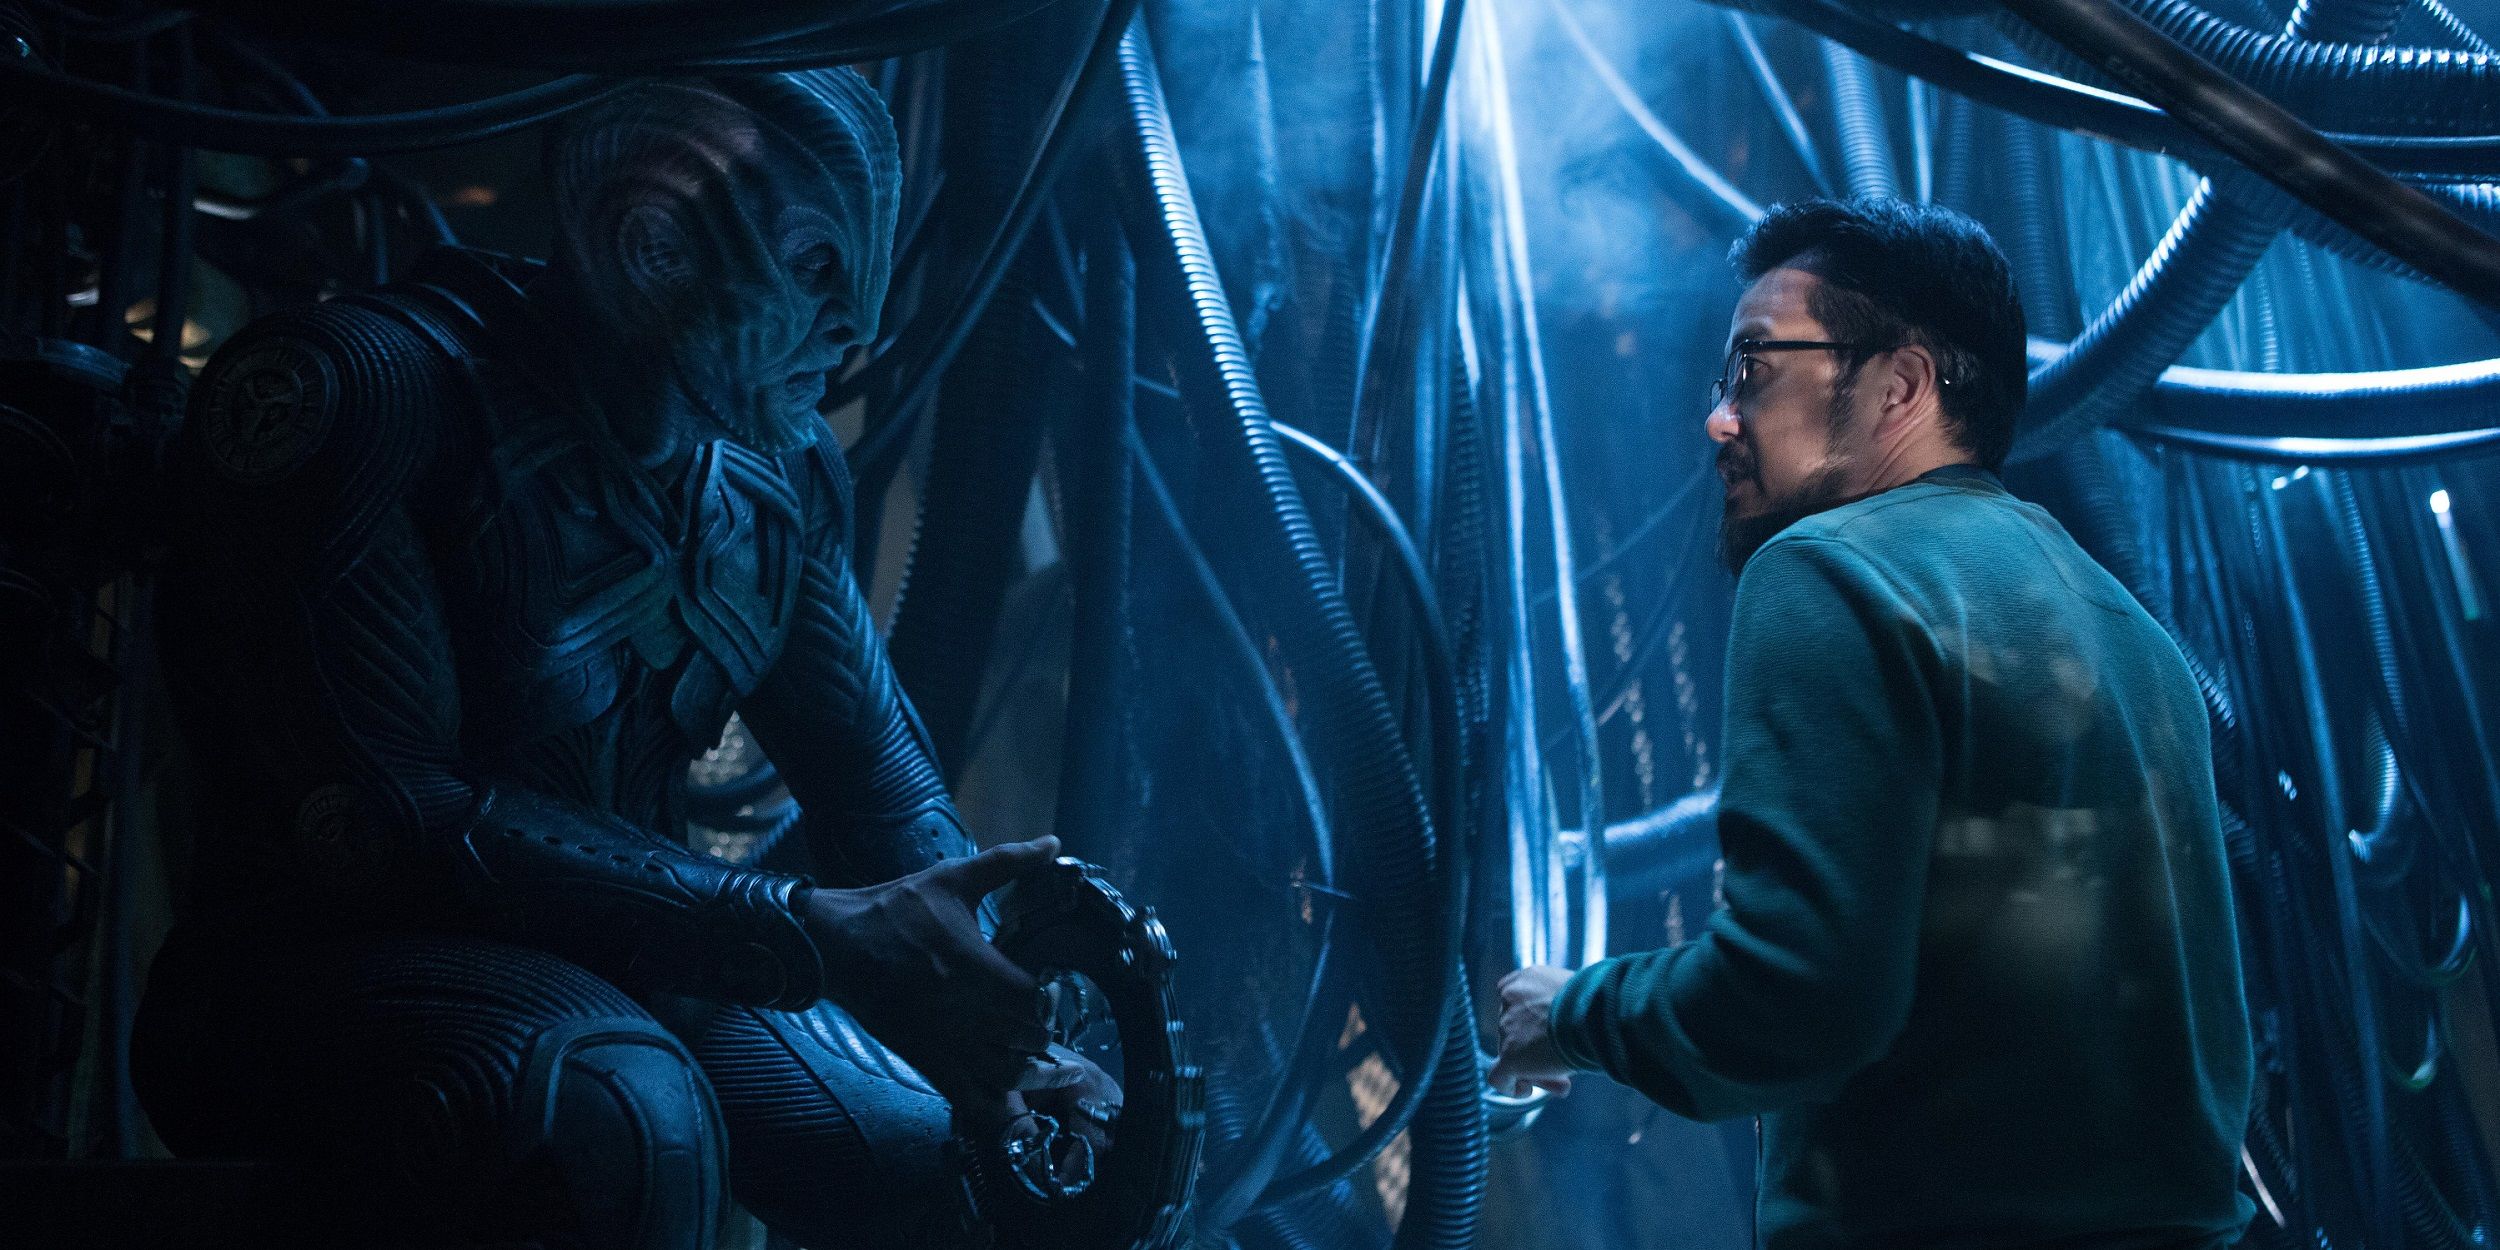 Idris Elba and director Justin Lin on set of Star Trek Beyond